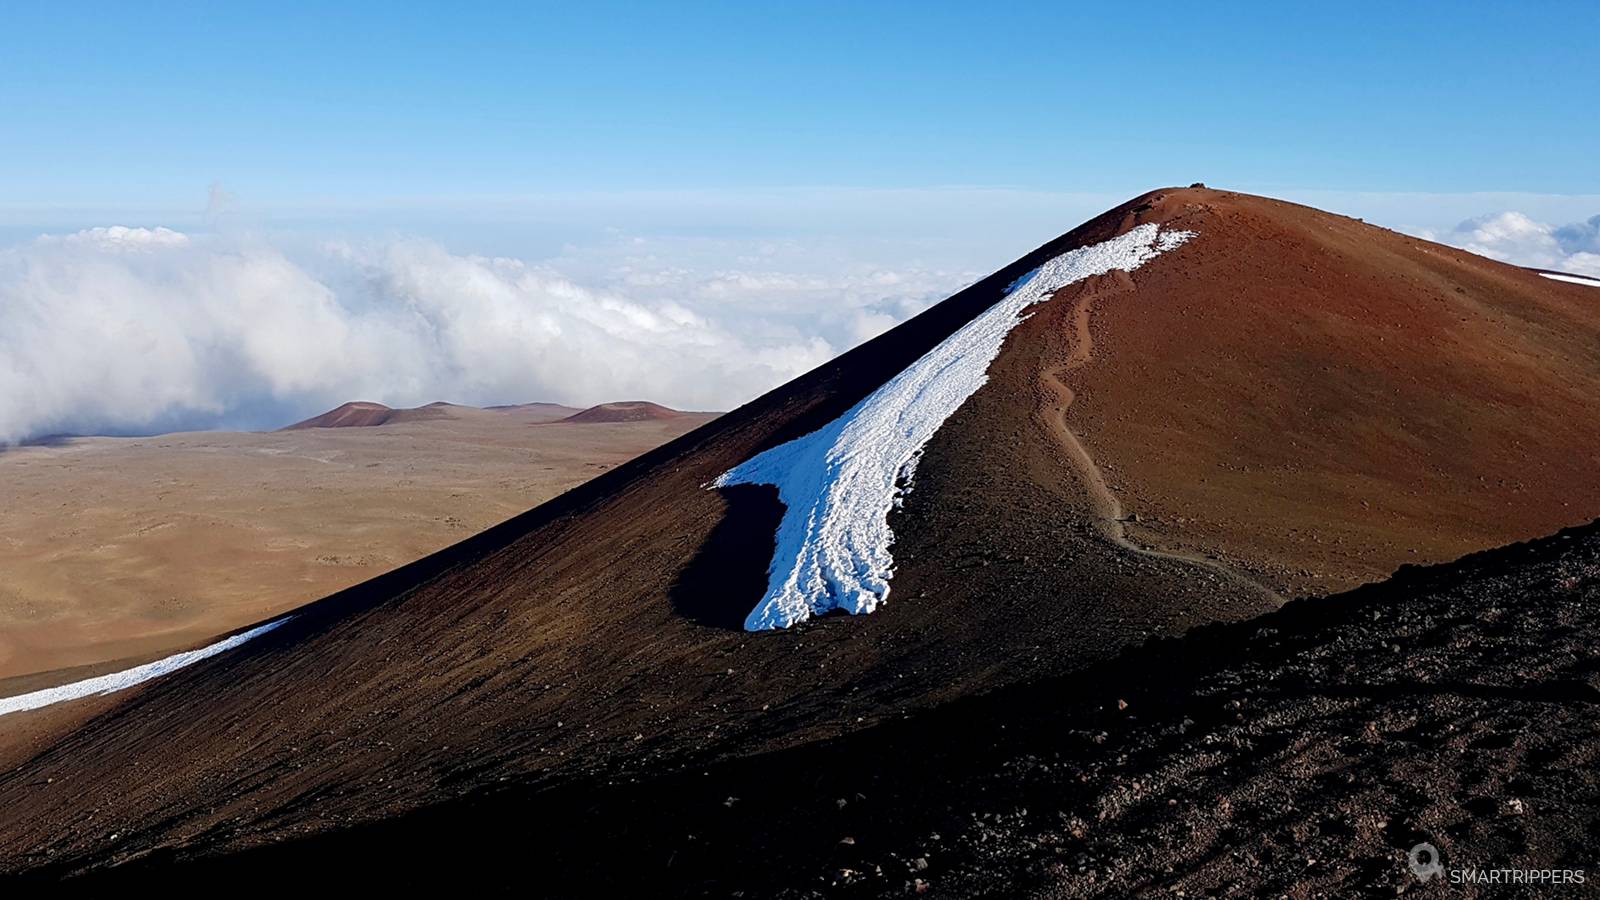 Climbing the Mauna Kea, Hawaii's highest peak